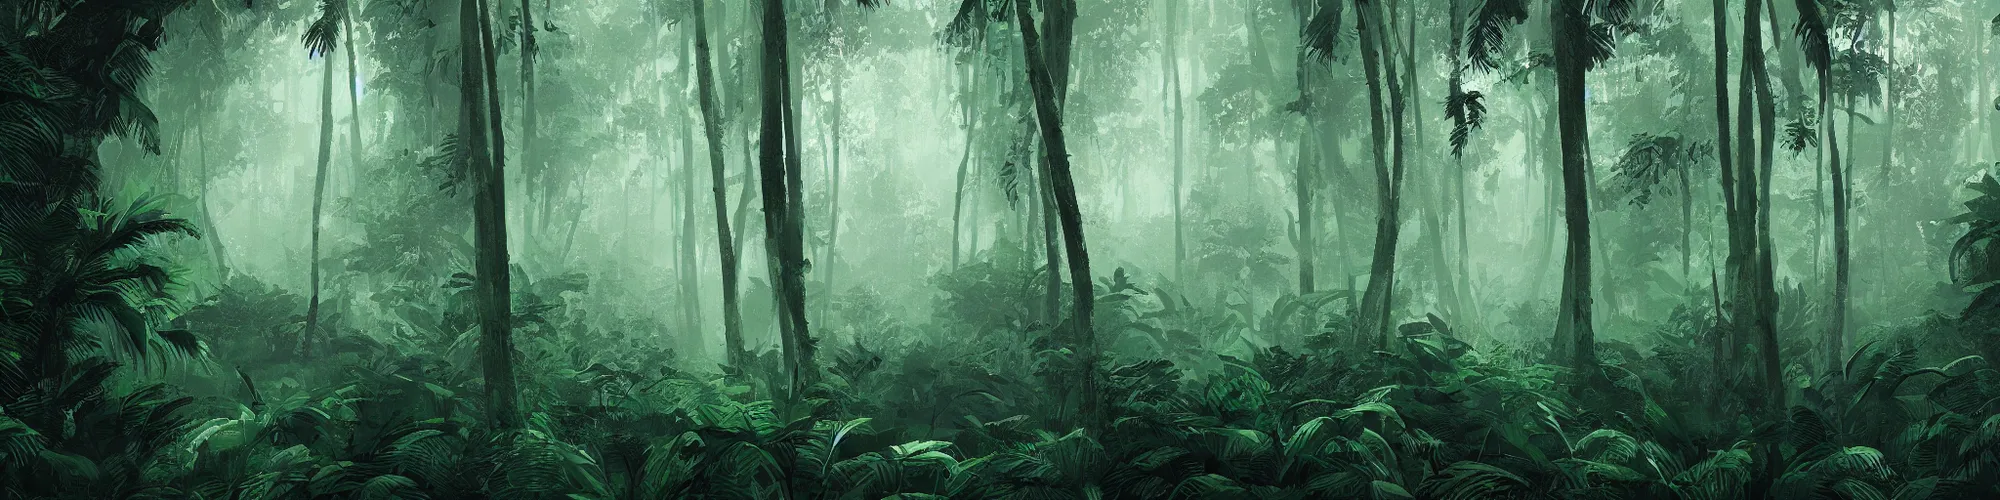 Prompt: dense jungle, gloomy, ambient, by alena aenami, wallpaper, digital art